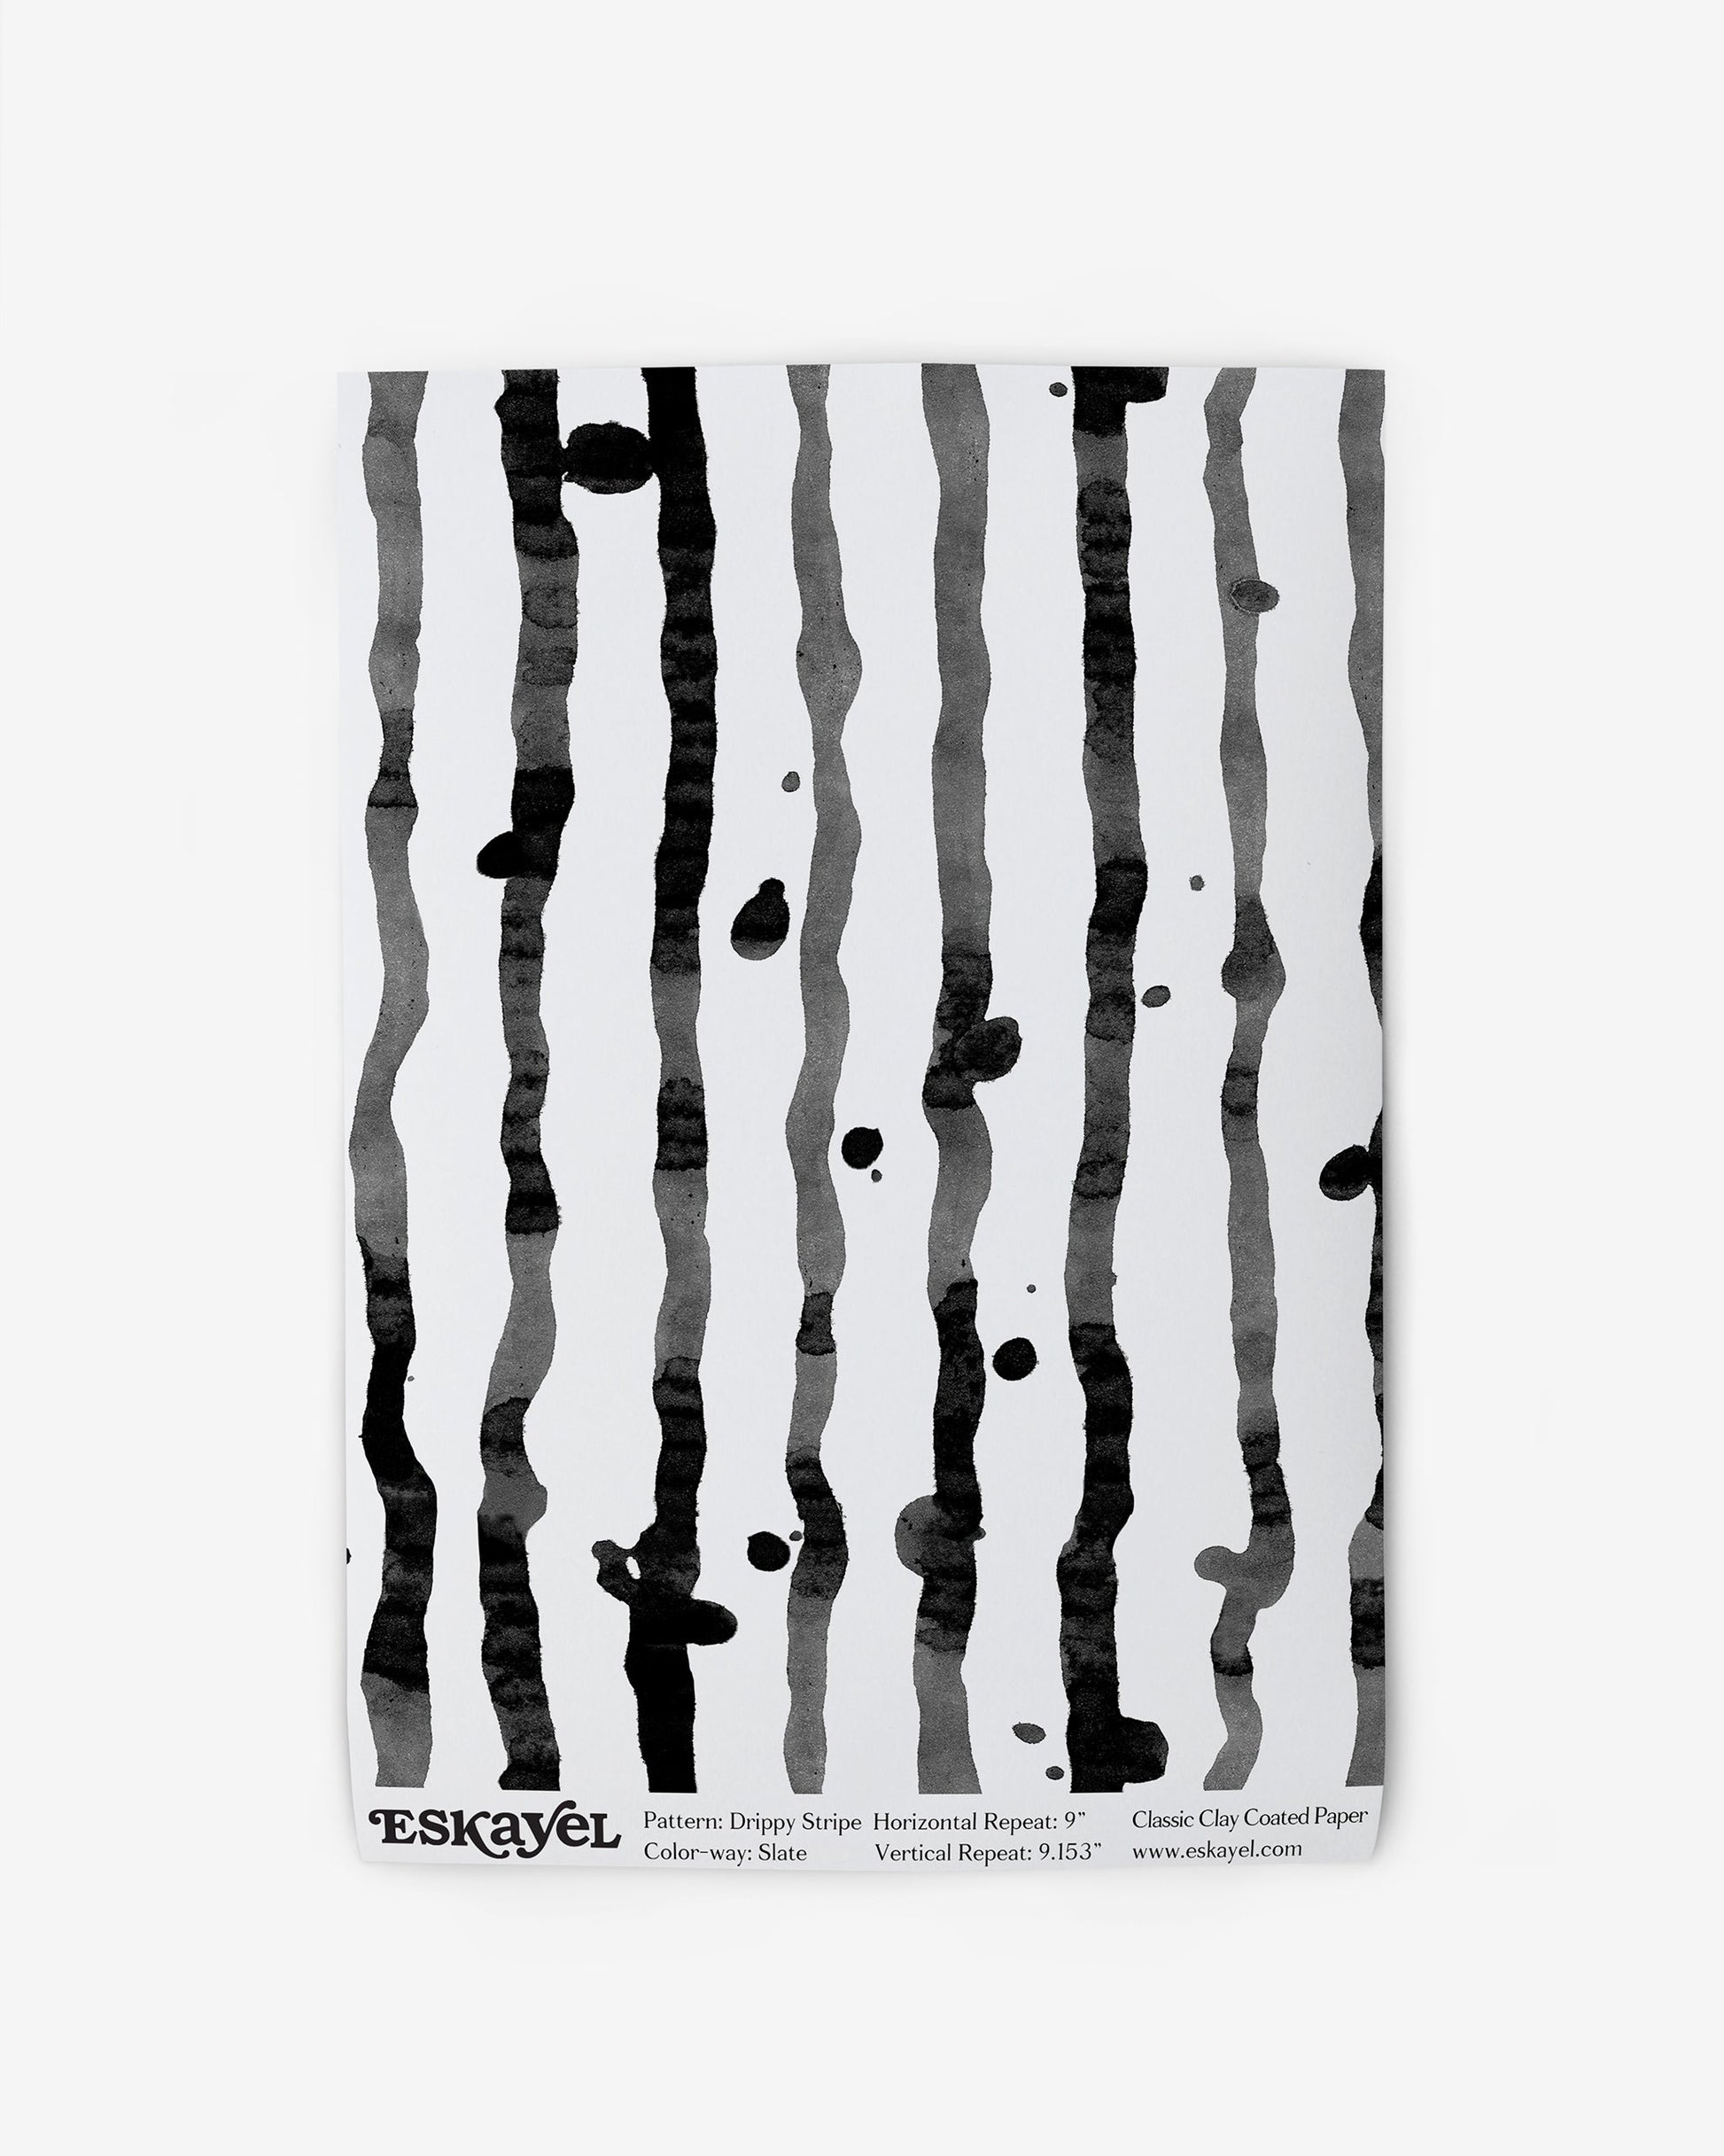 Black and white stripes on wallpaper, inspired by the Eskayel Drippy Stripe Wallpaper Slate designon wallpaper